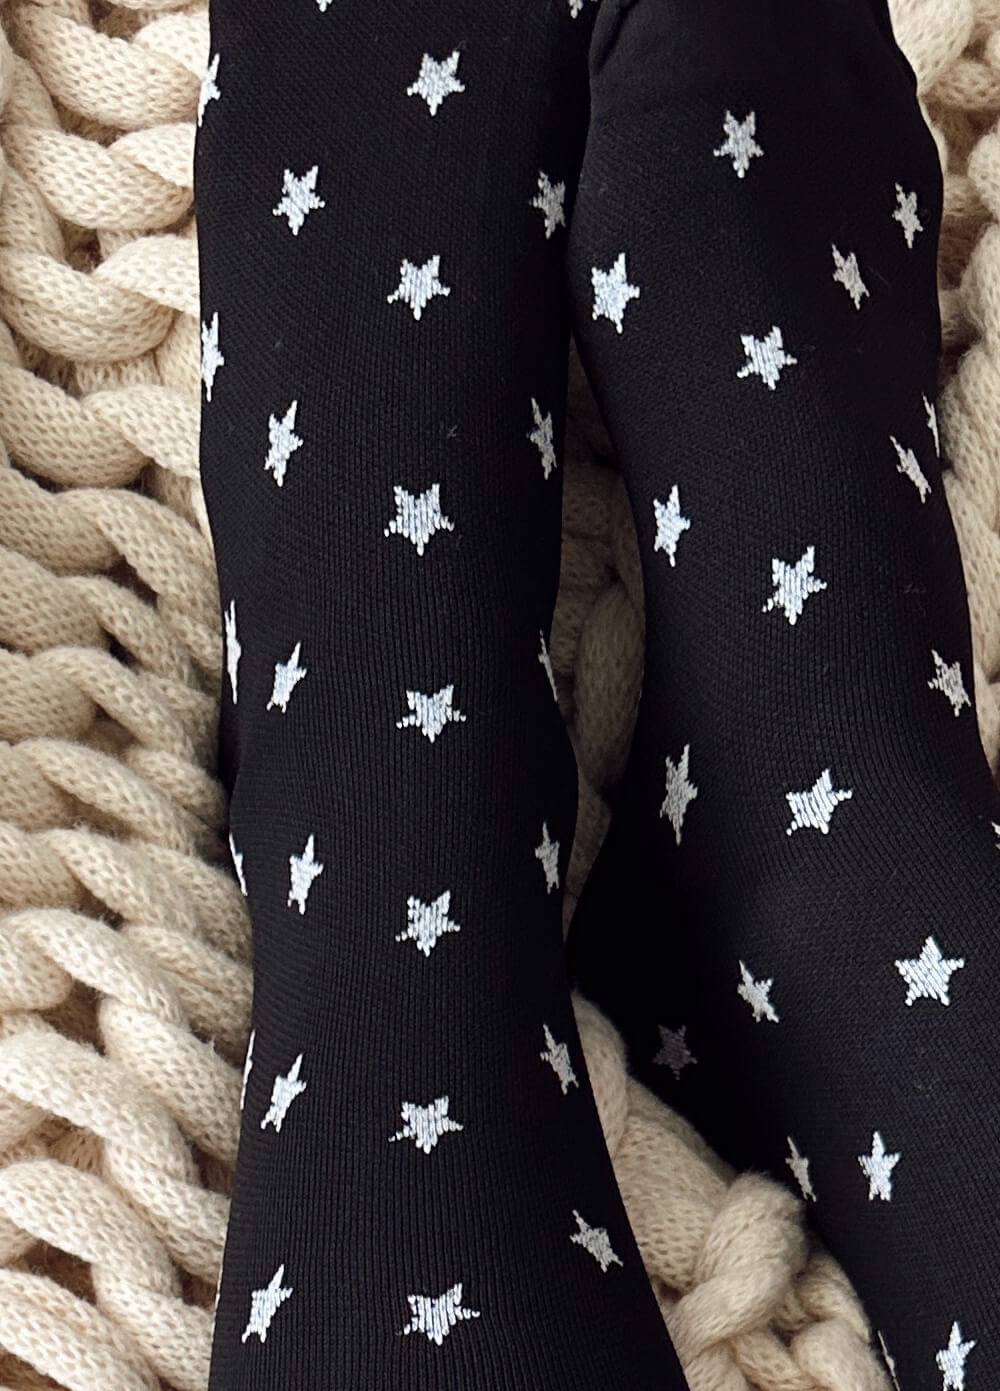 Mama Sox - Delight Maternity Compression Socks in Black Star